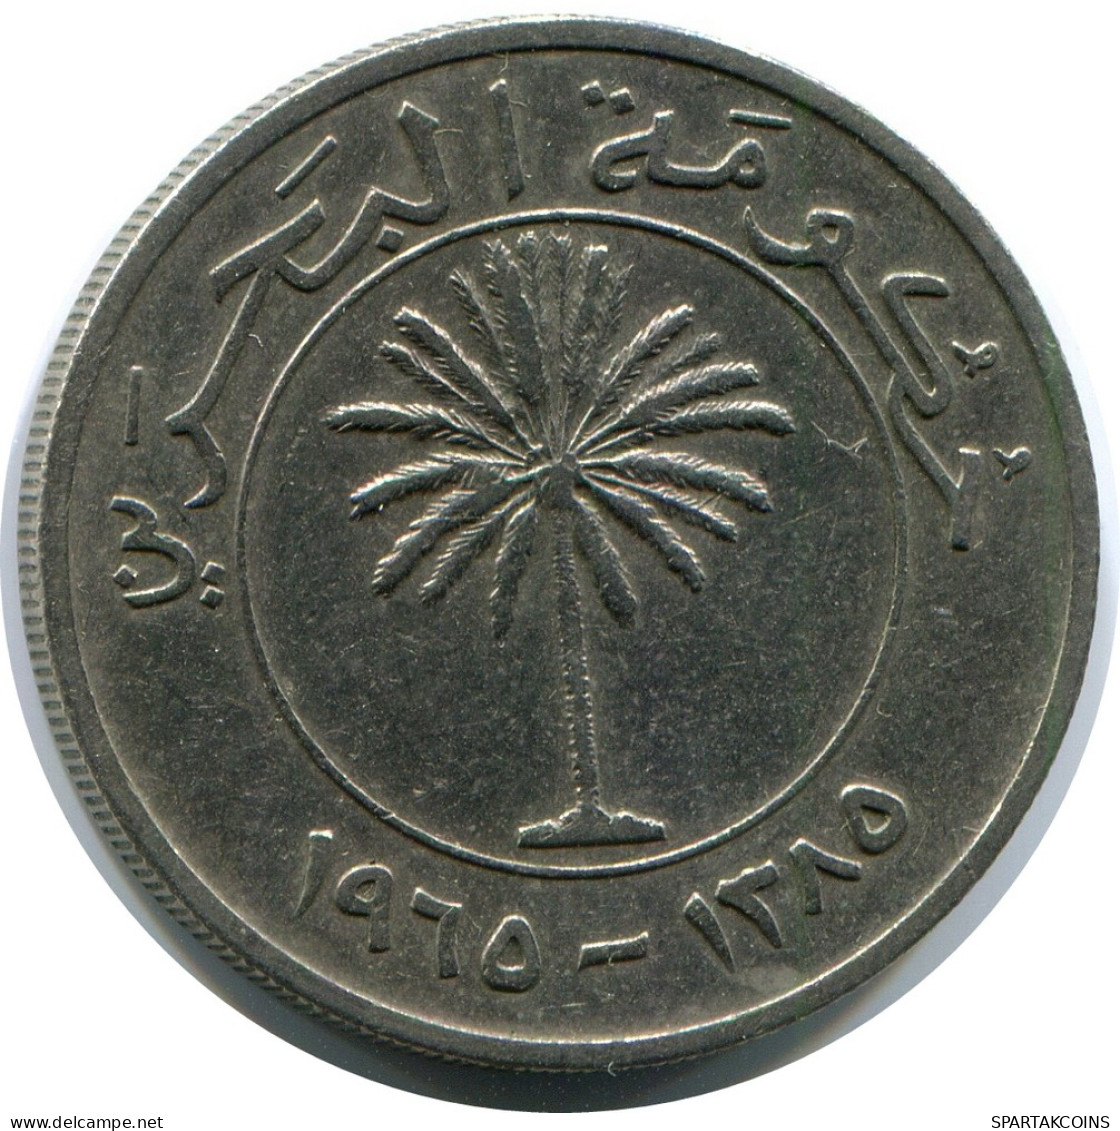 100 FILS 1970 BAHRAIN Coin #AP977.U - Bahrain